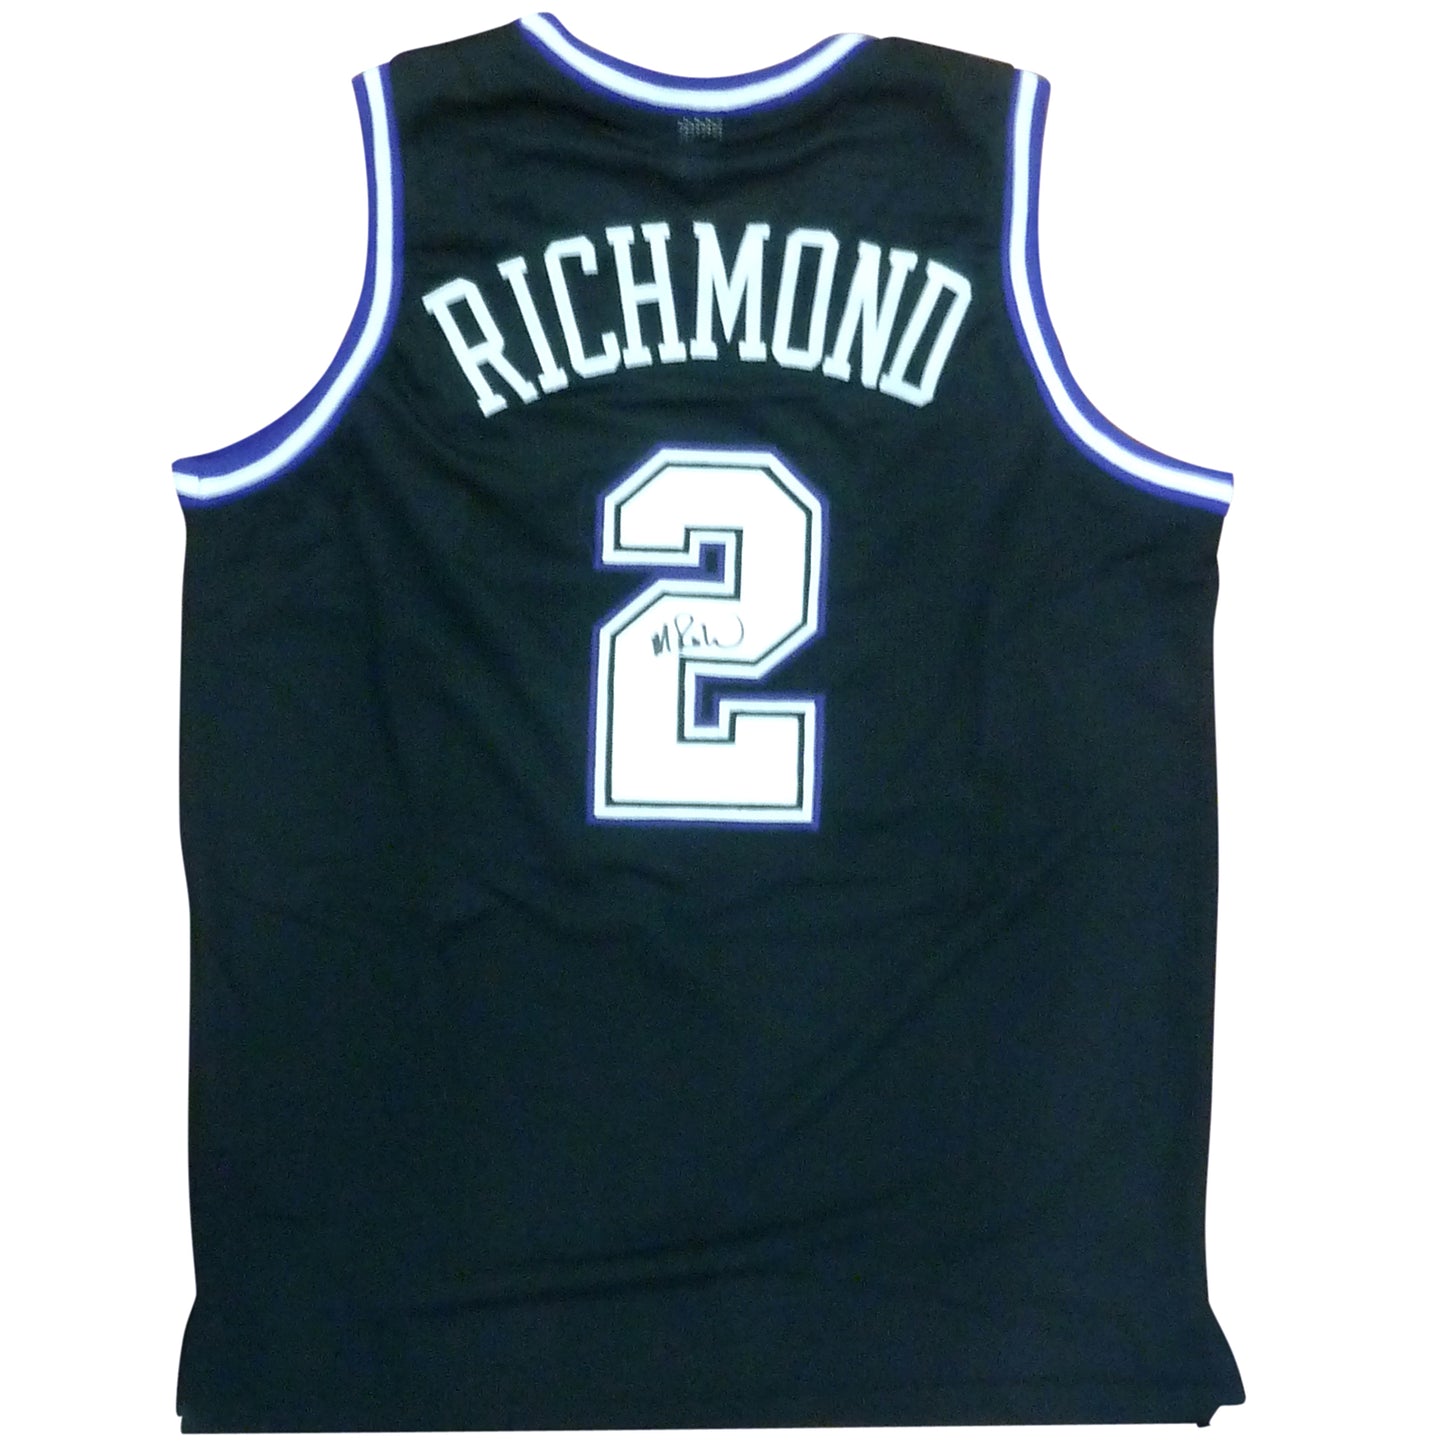 Mitch Richmond Autographed Sacramento (Black #2) Custom Jersey – Beckett